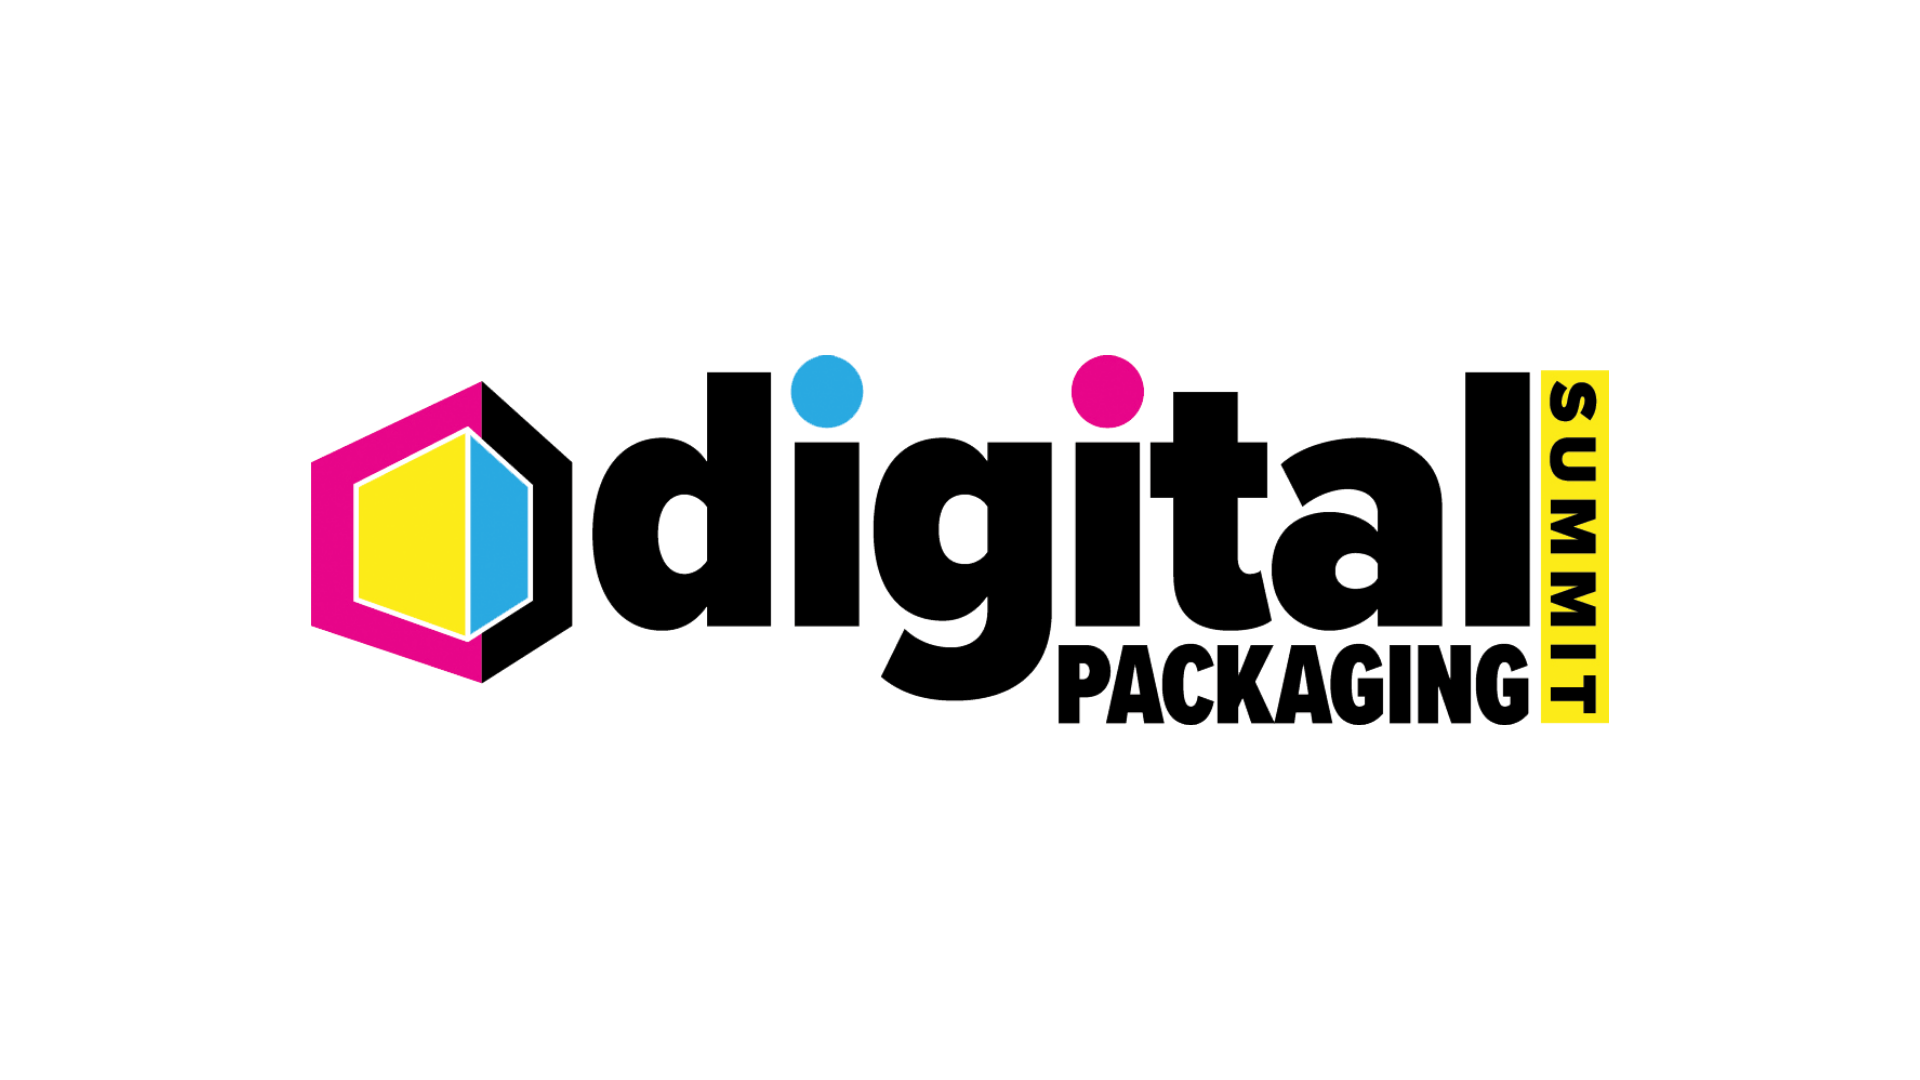 Digital Packaging Summit logo